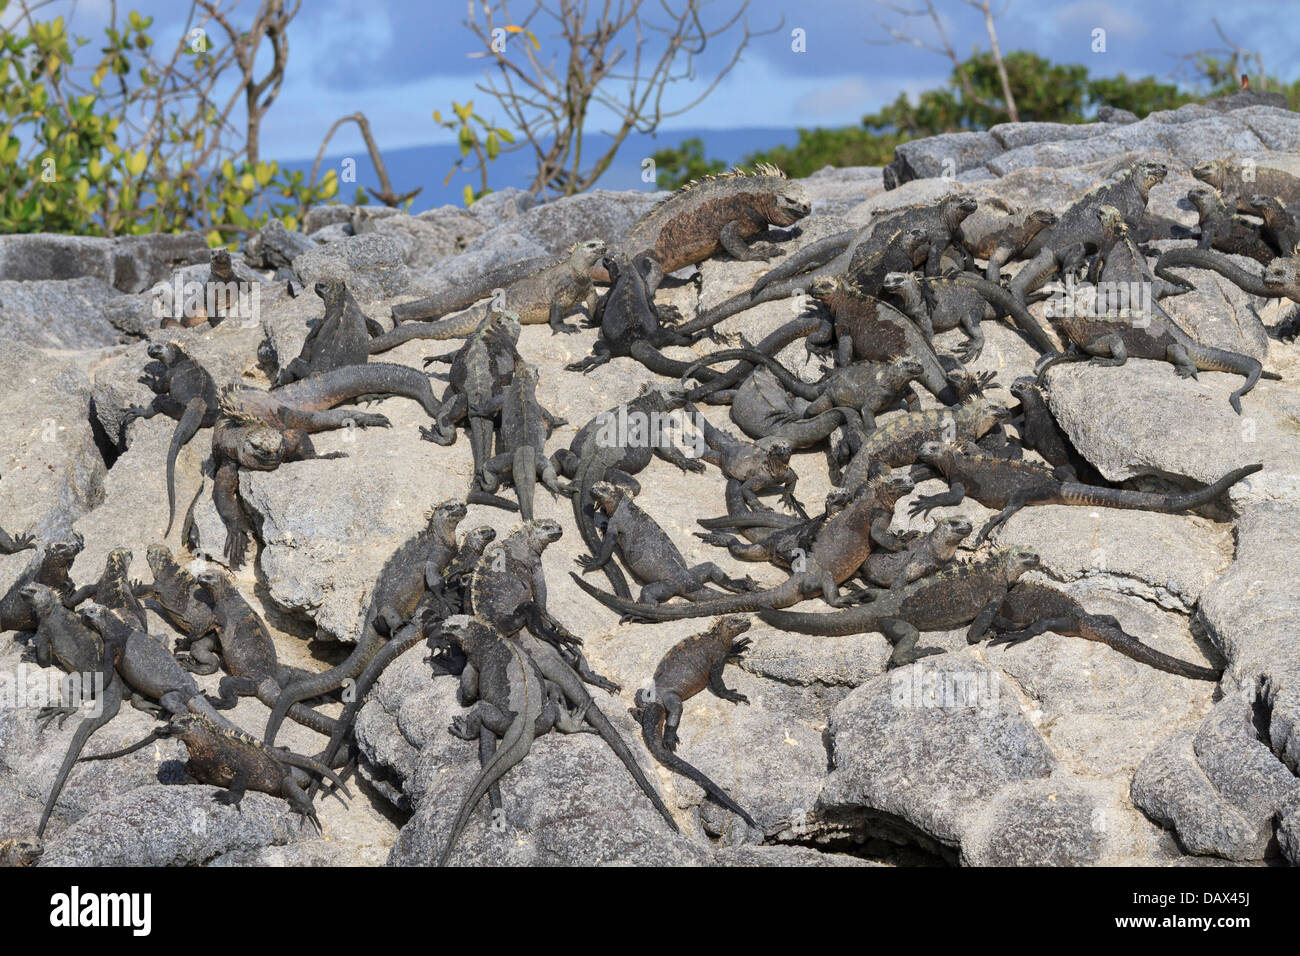 Marine Iguana, Amblyrhynchus cristatus, Punta Mangle, Fernandina Island, Galapagos Islands, Ecuador Stock Photo